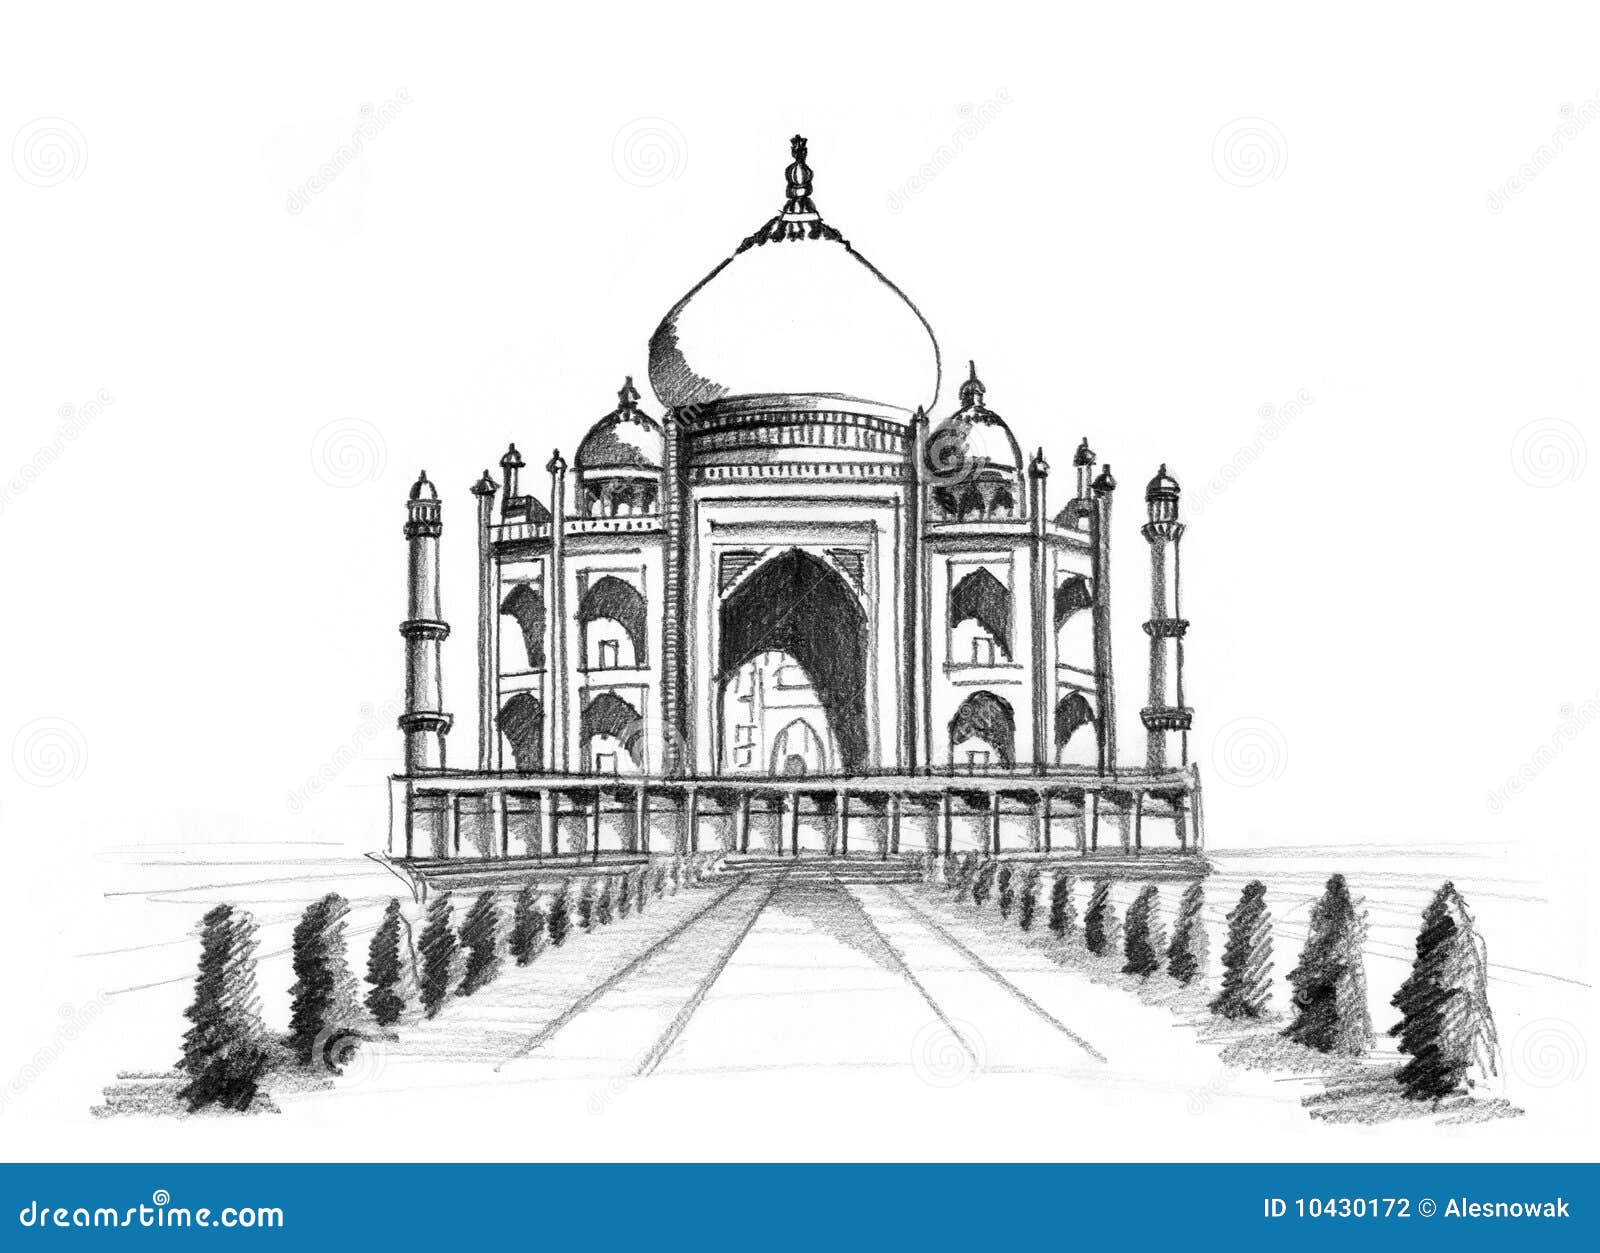 India Sketch: Taj Mahal : Rhoda Draws!